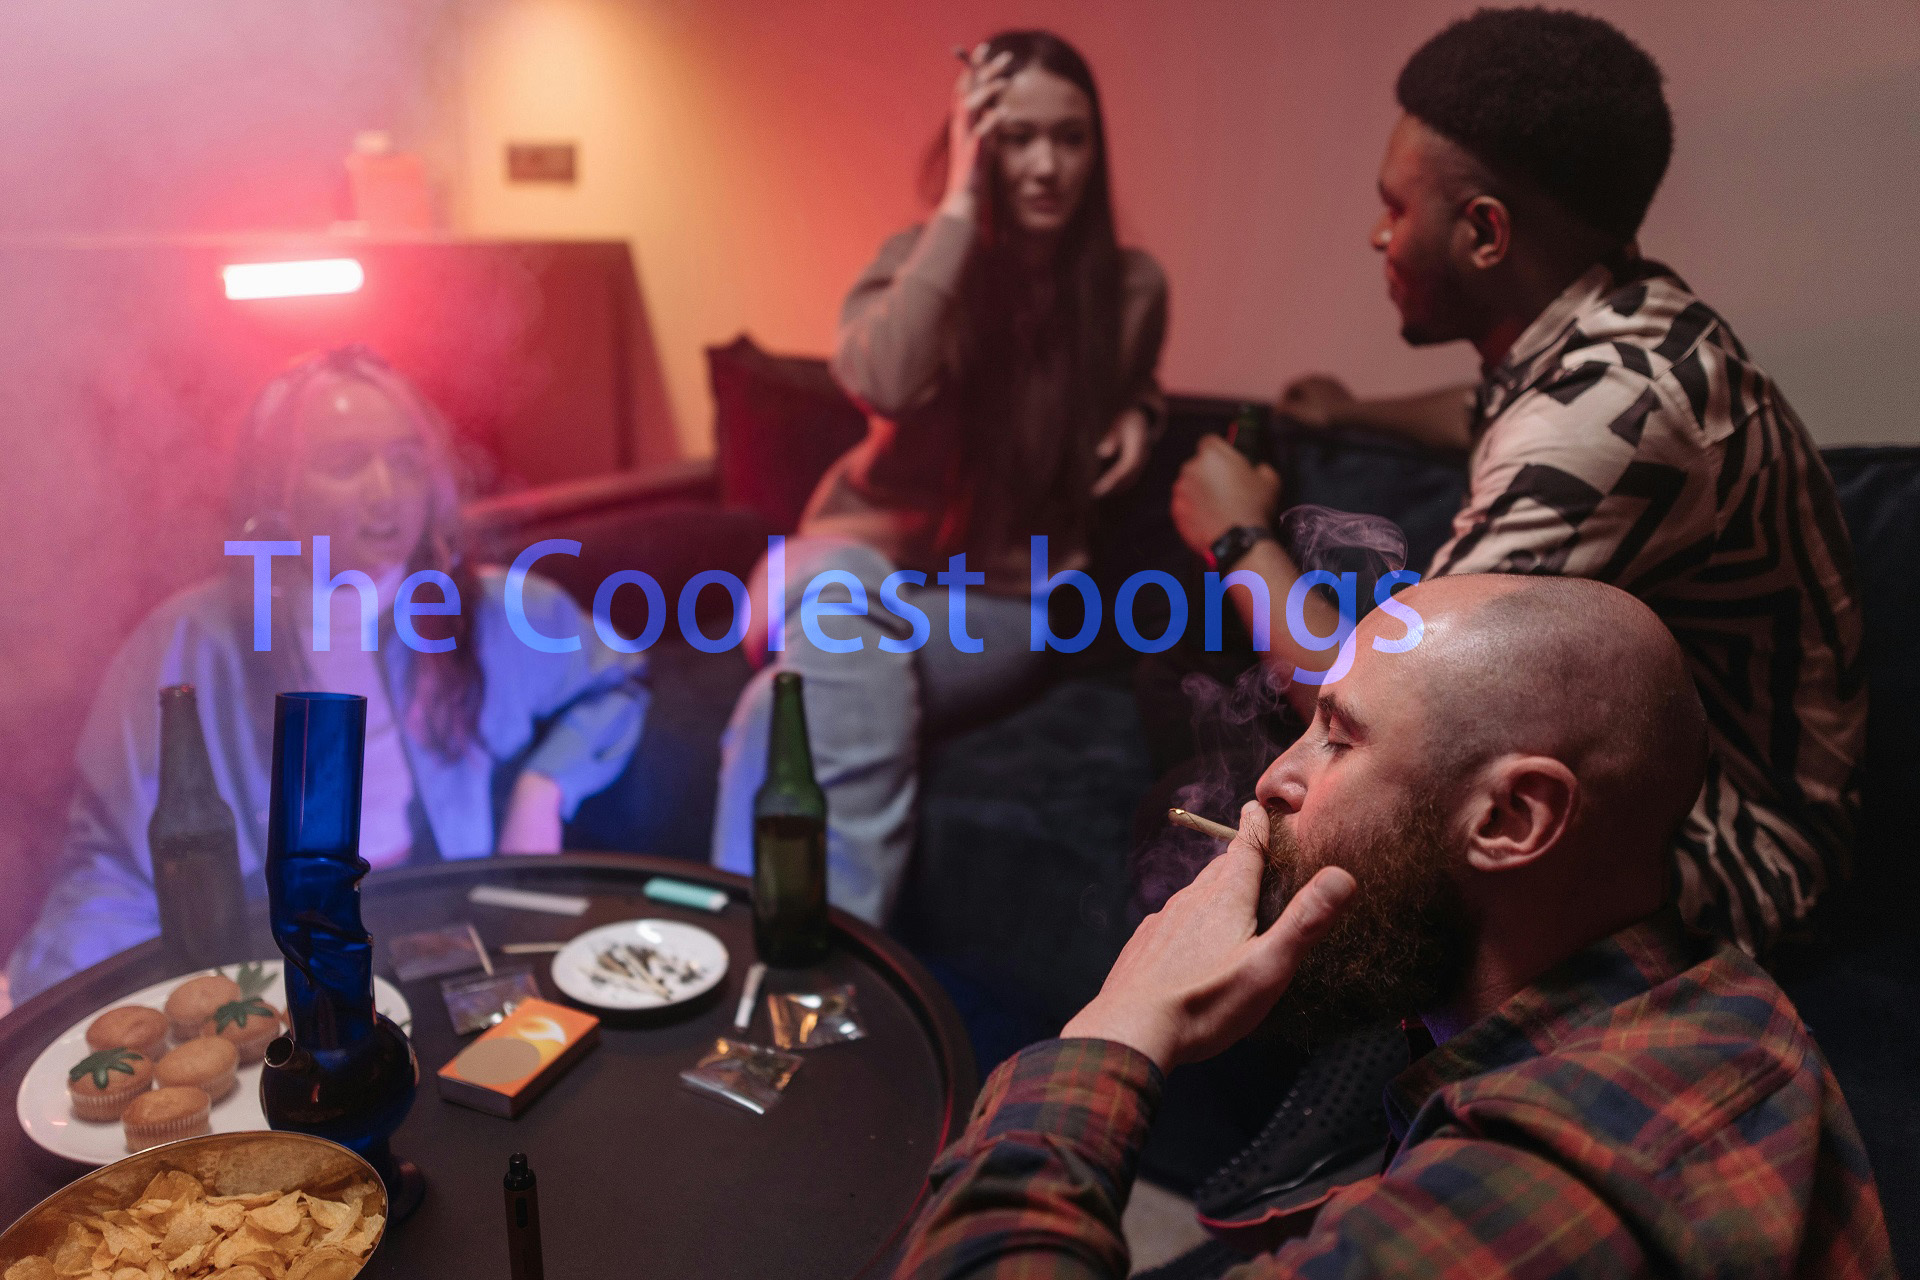 The Coolest bongs